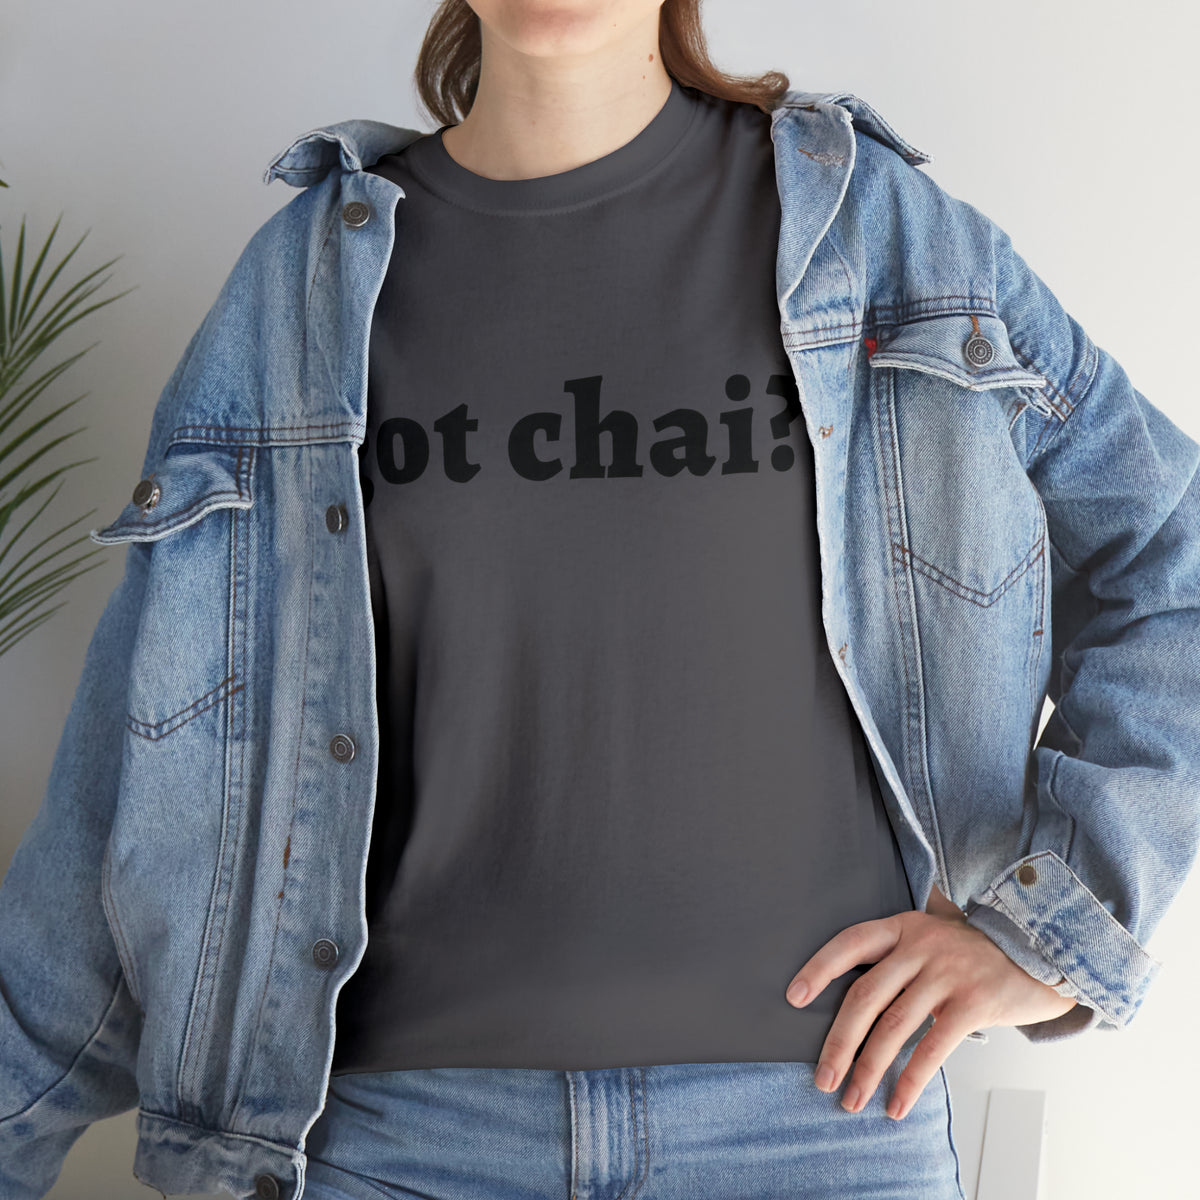 Got Chai? T-Shirt Design by C&C